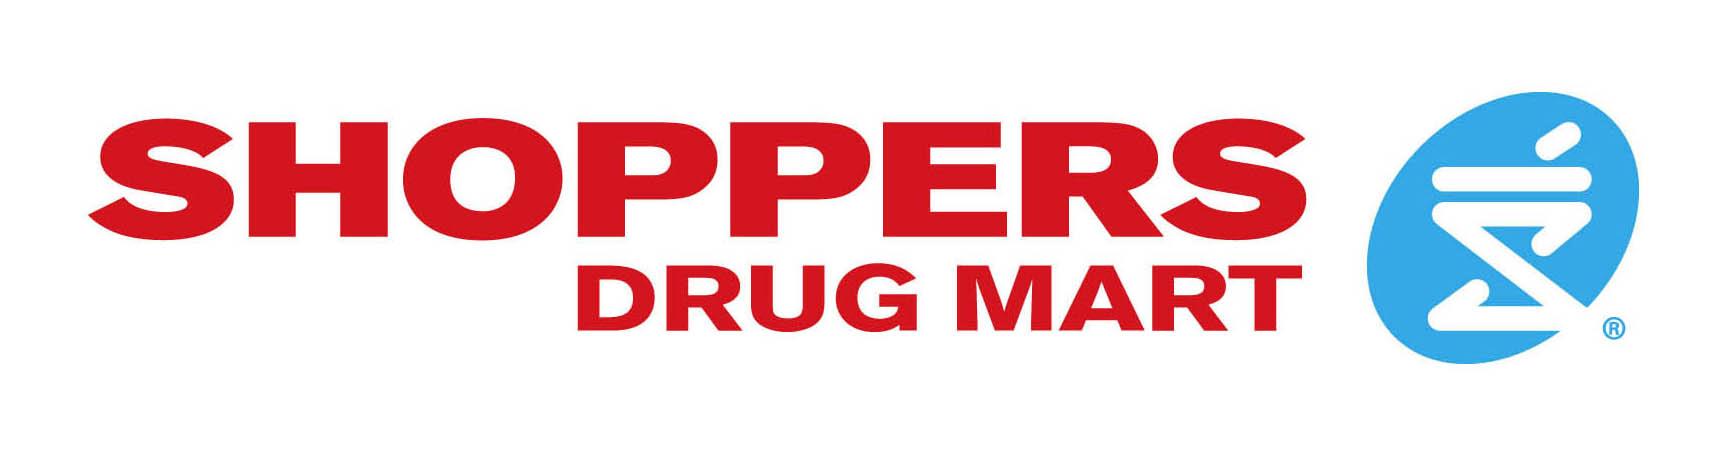 Shoppers Drug Mart Logo photo - 1